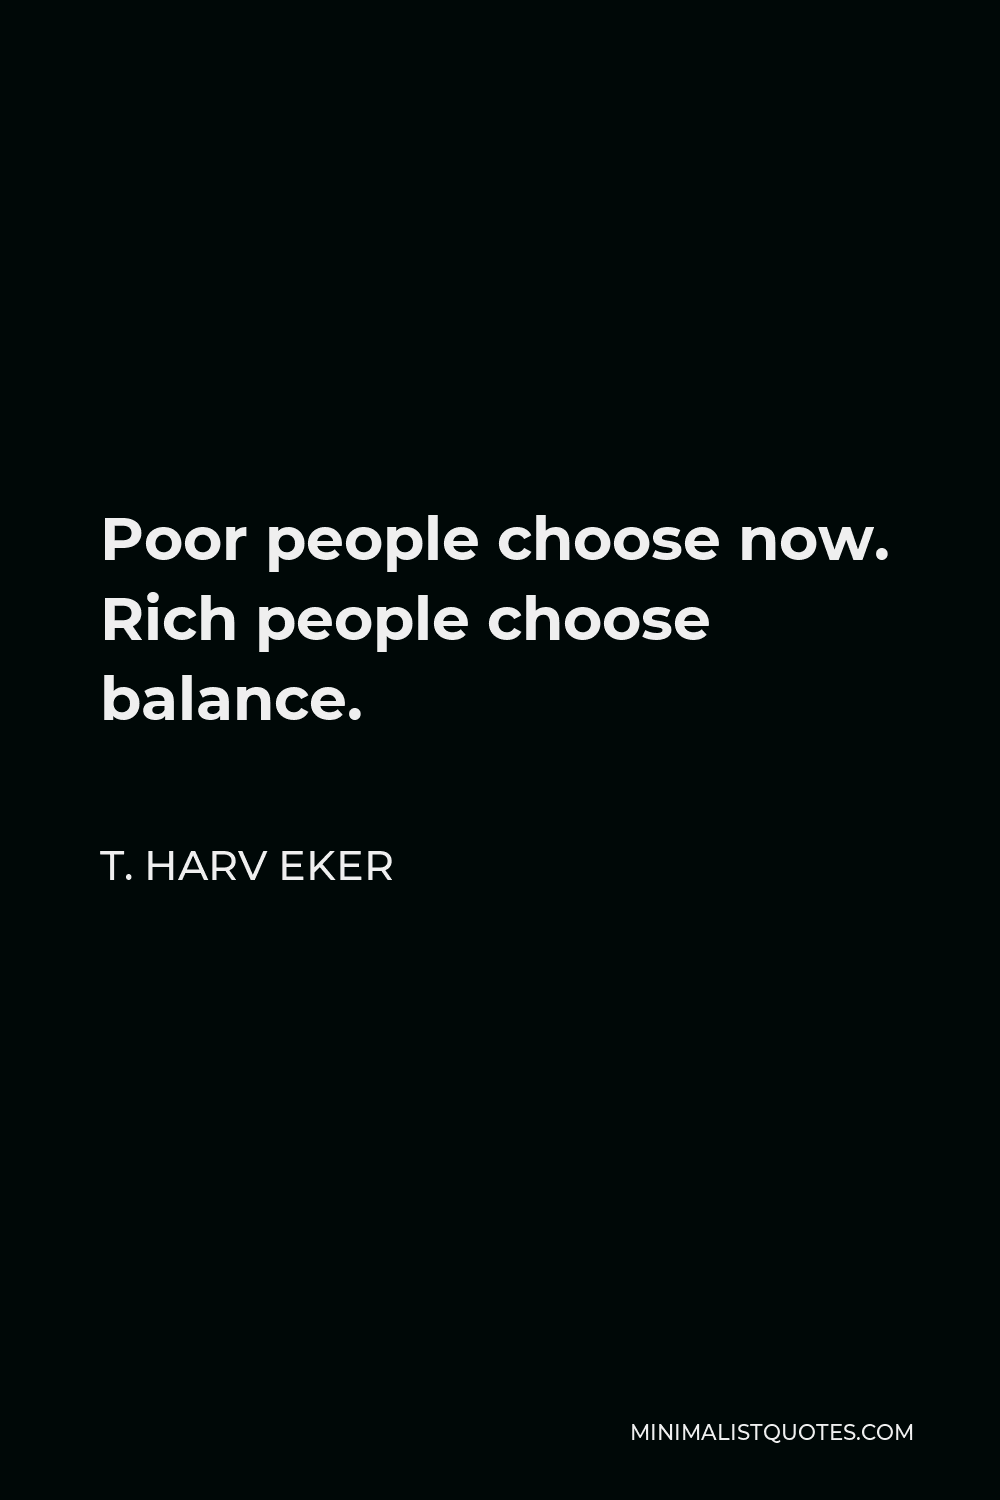 T. Harv Eker Quote - Poor people choose now. Rich people choose balance.